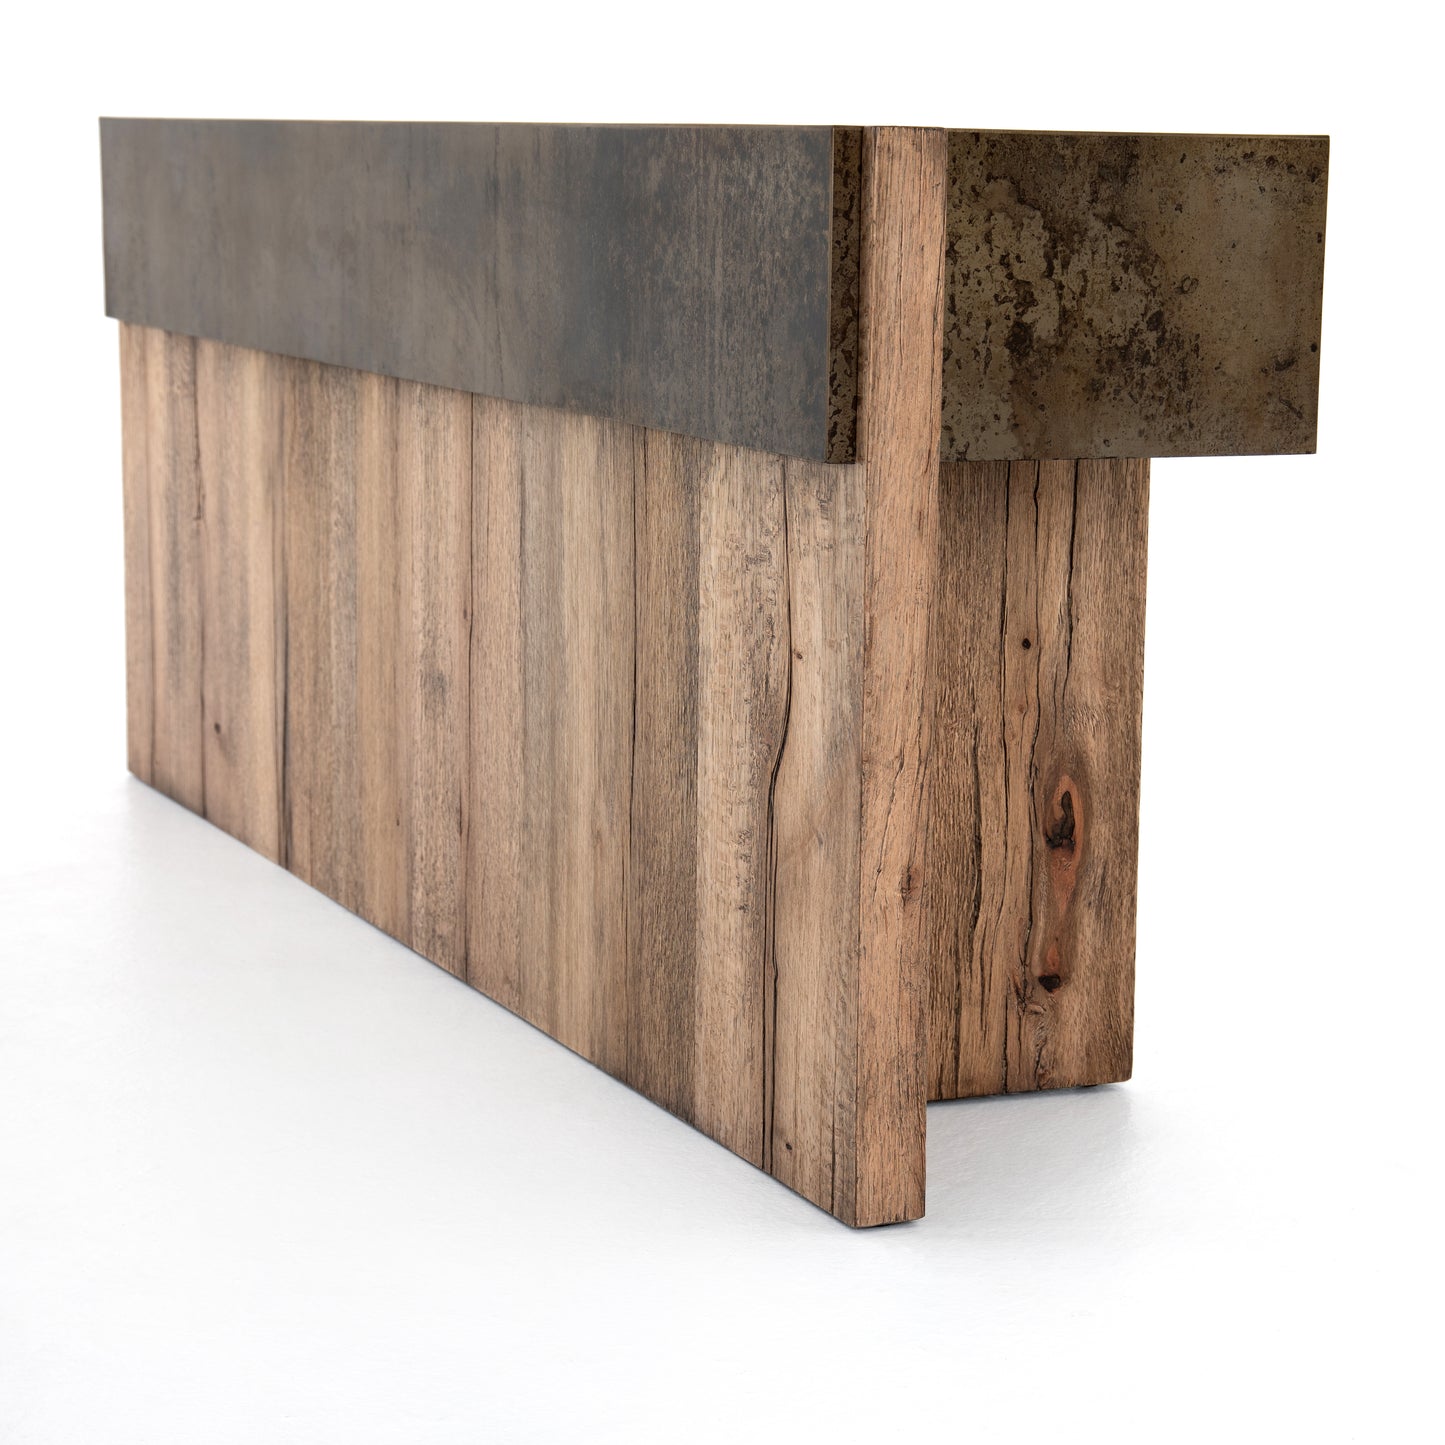 Bingham Console Table - Rustic Oak